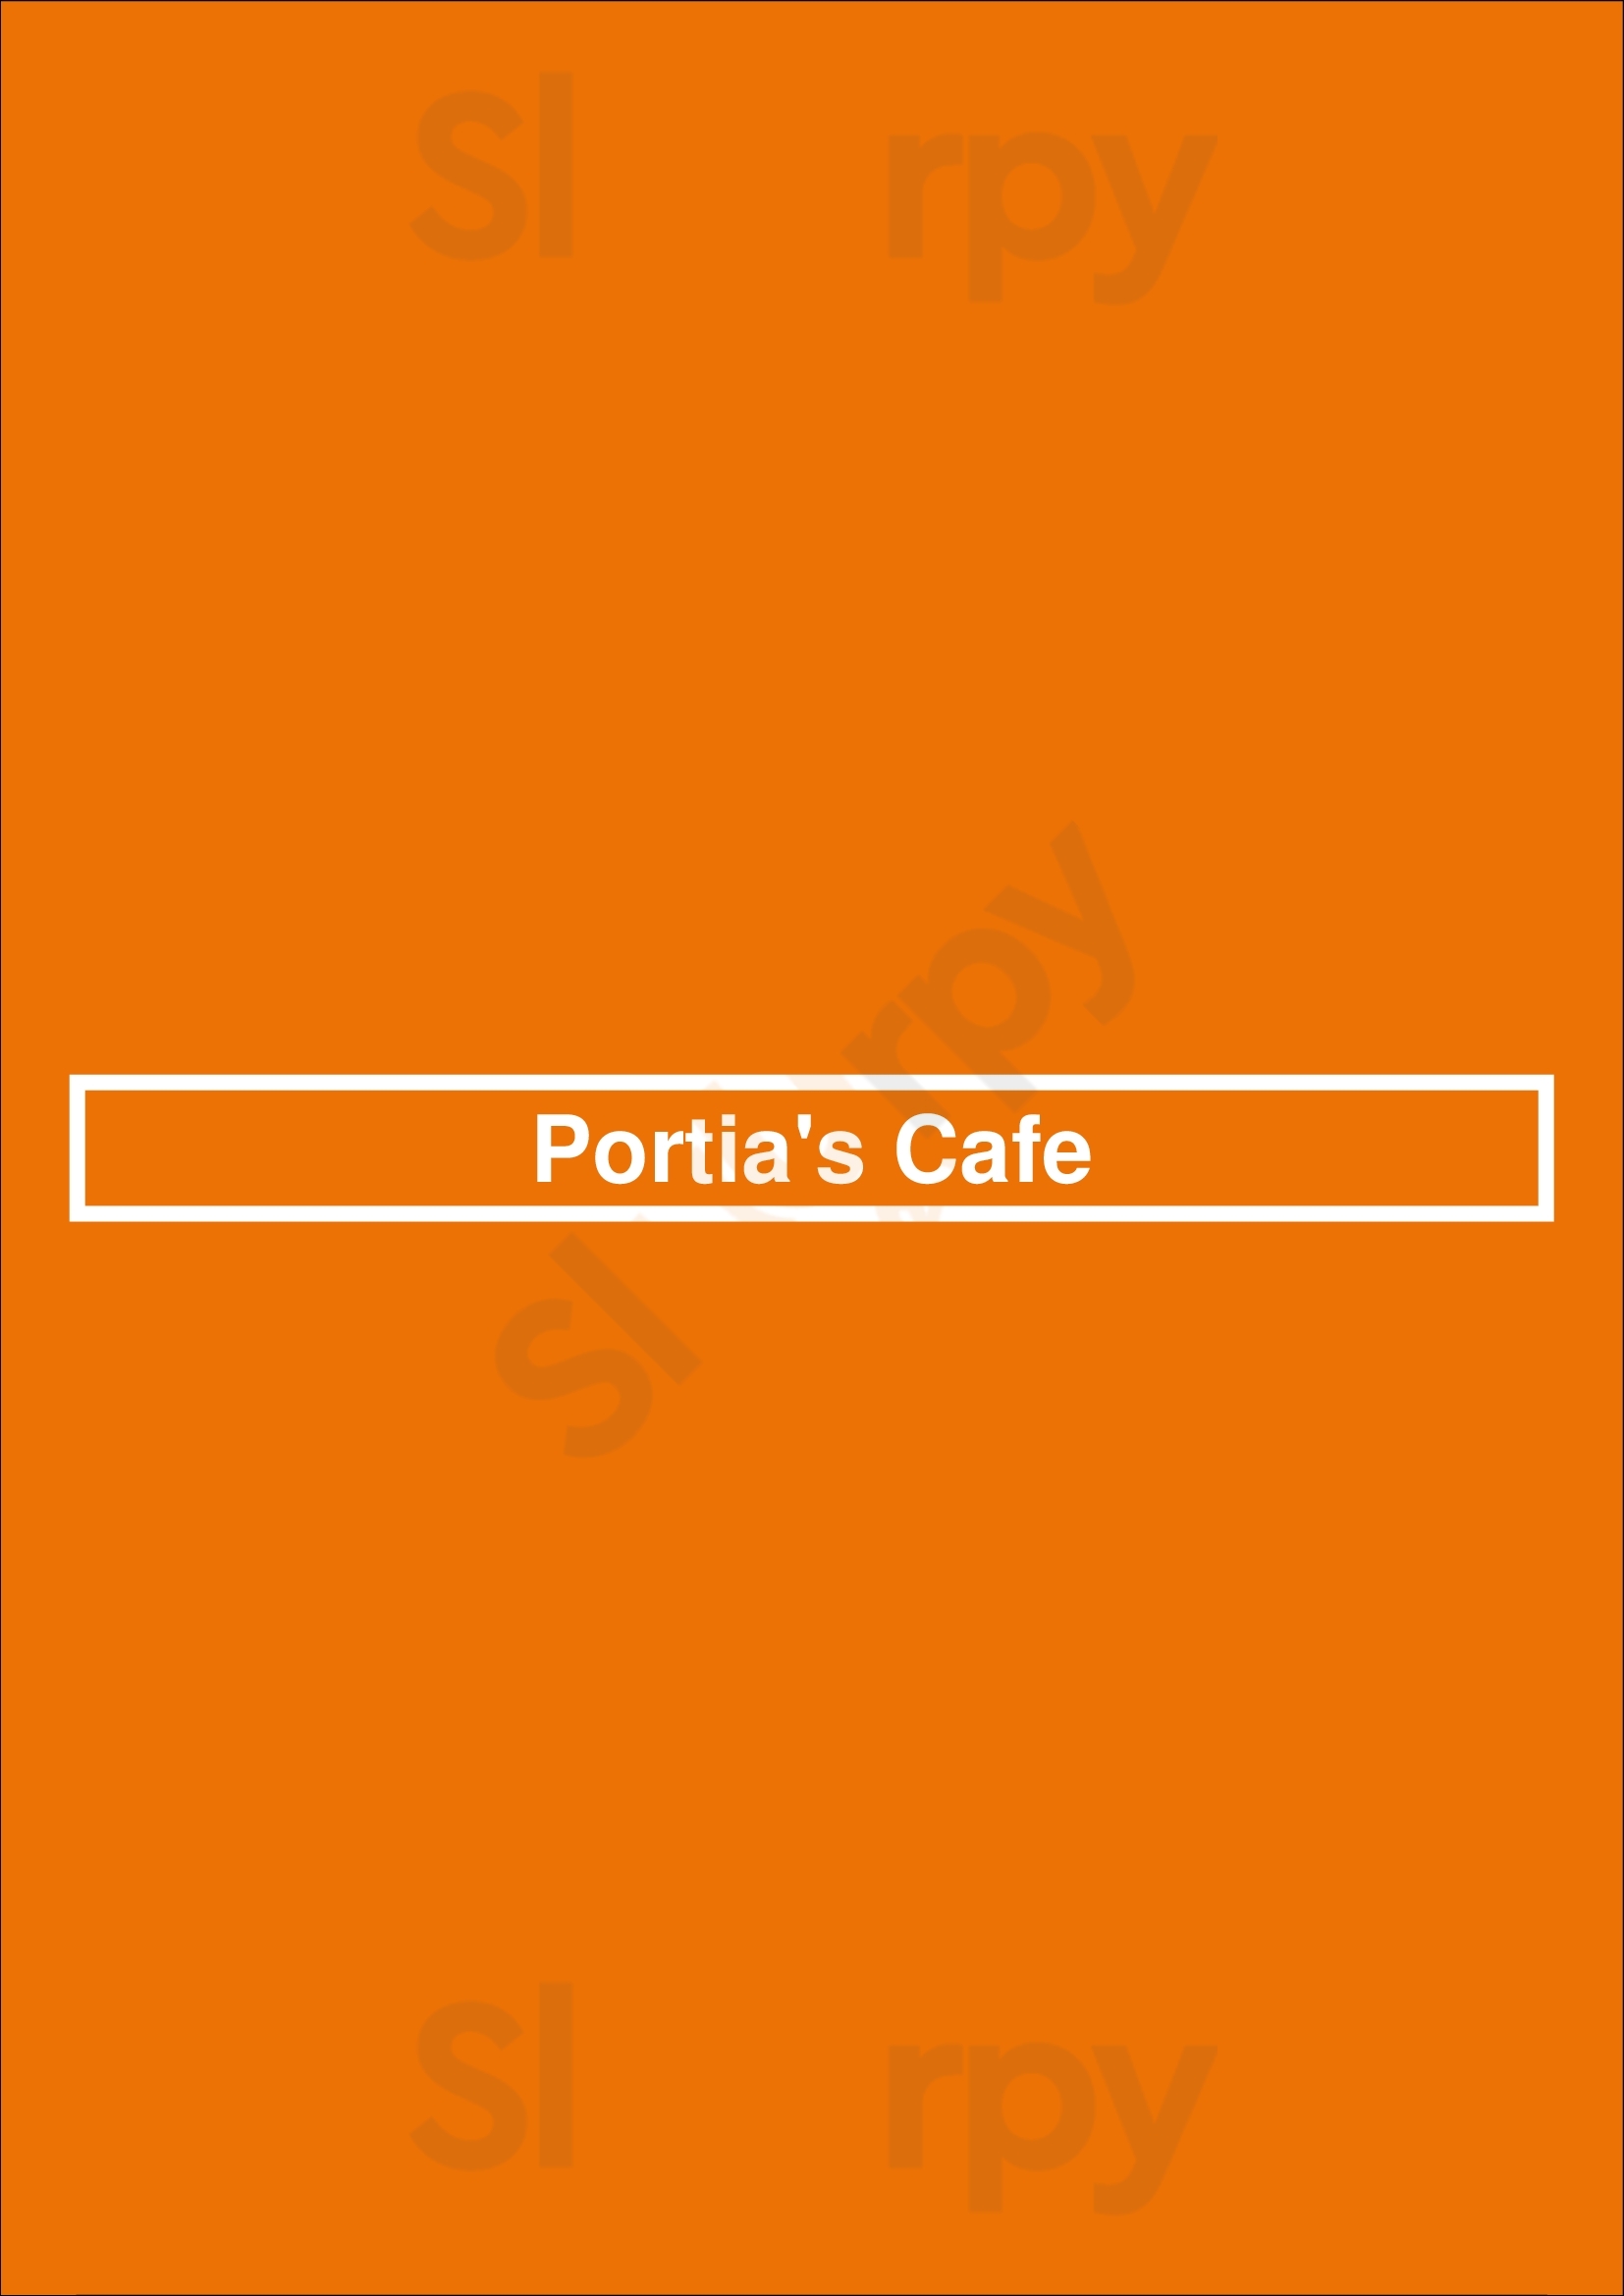 Portia's Cafe Columbus Menu - 1